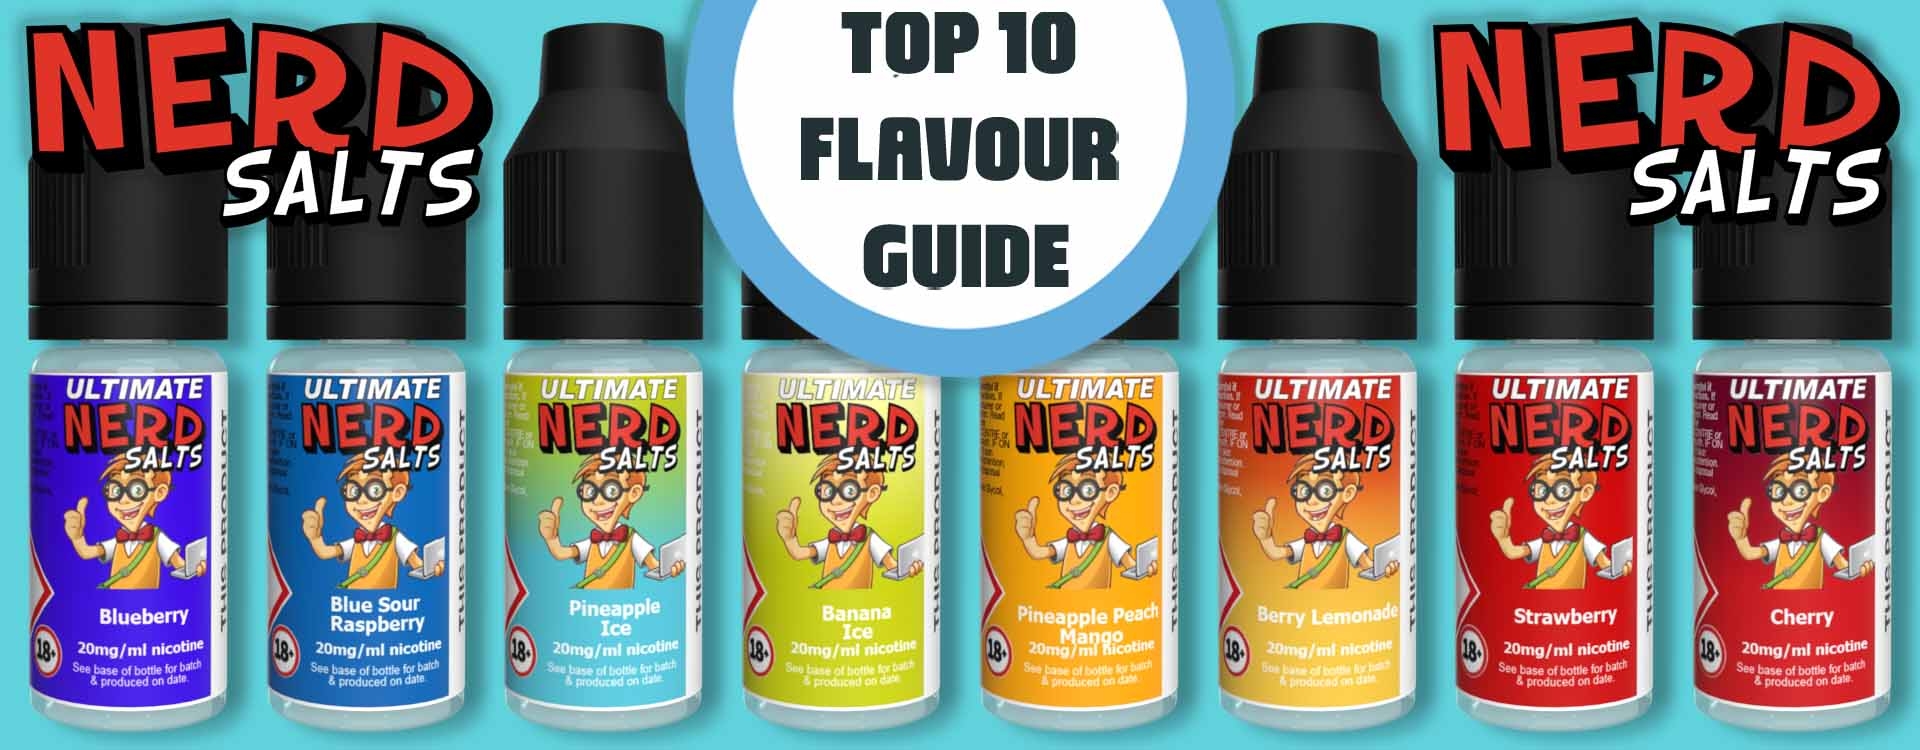 Top 10 Nerds Salts Flavours